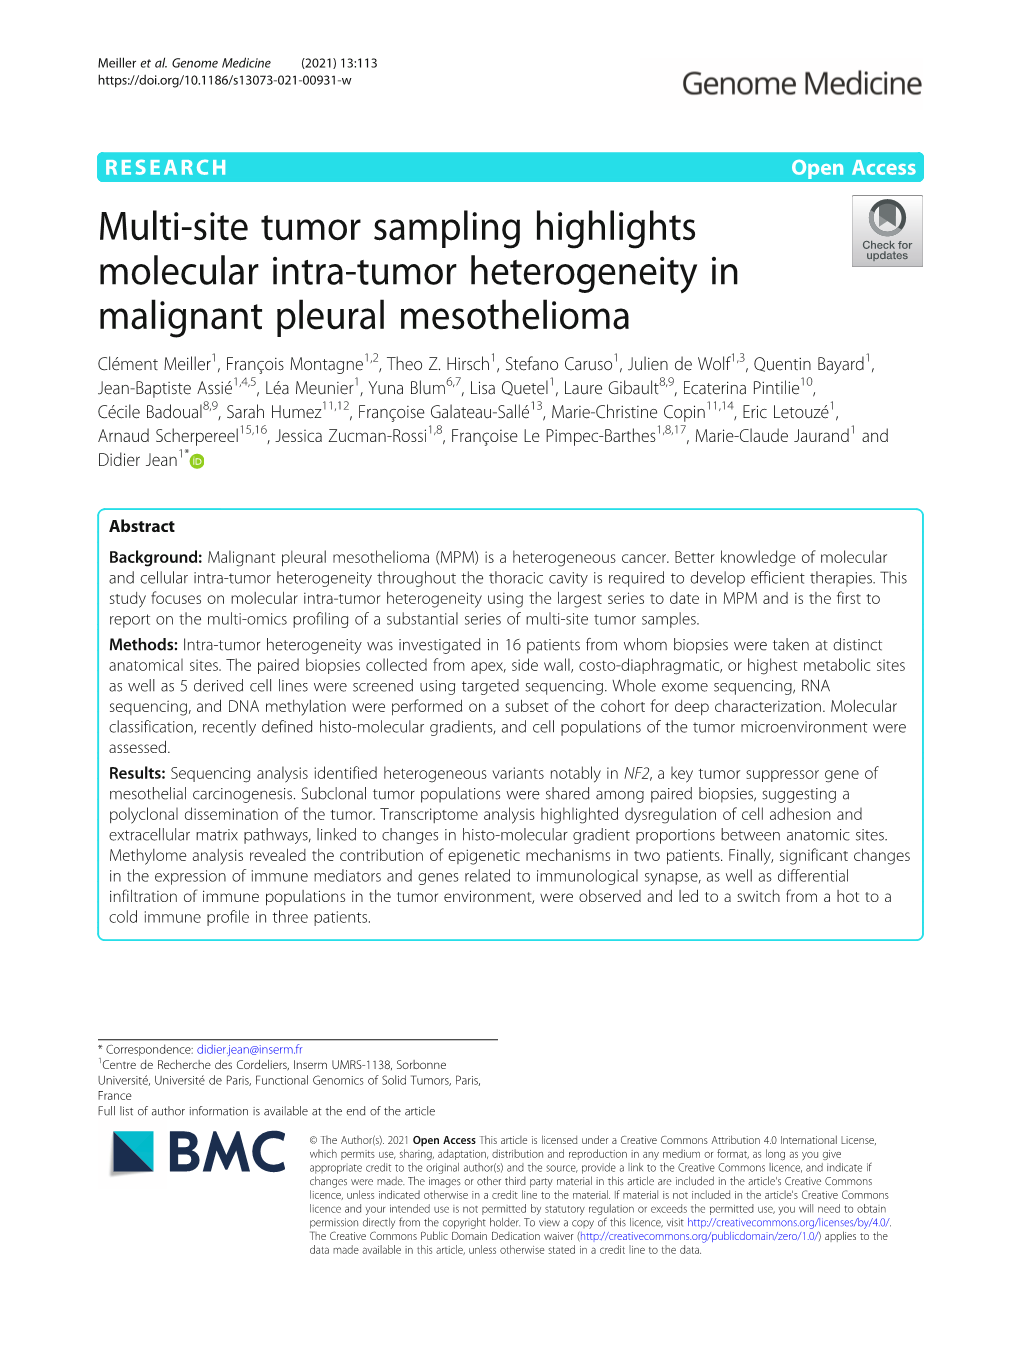 Multi-Site Tumor Sampling Highlights Molecular Intra-Tumor Heterogeneity in Malignant Pleural Mesothelioma Clément Meiller1, François Montagne1,2, Theo Z